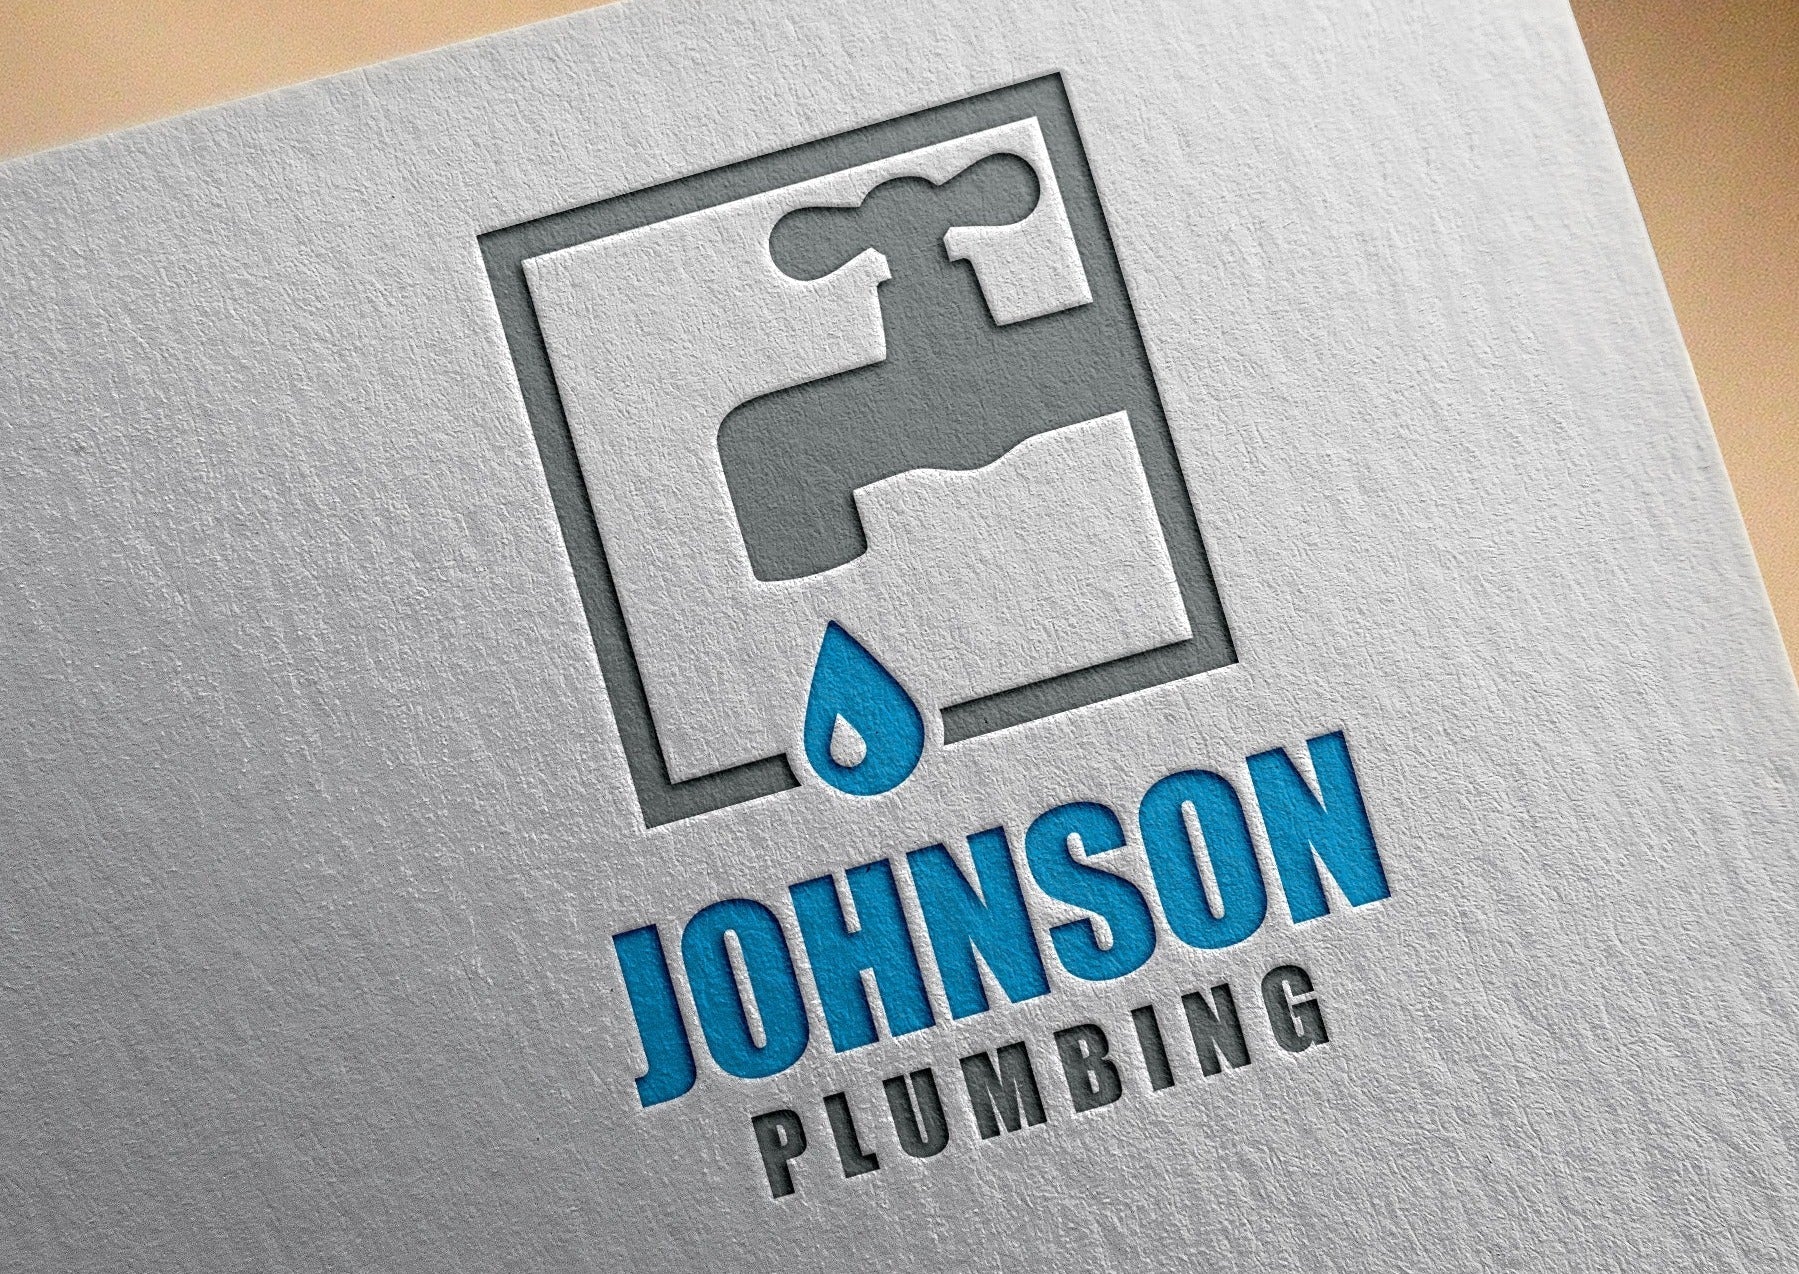 Plumbing Company Logo | Plumbing Business | Plumber | Professional Plumber | Plumbing Services | Water Drop | Faucet | Logo Design